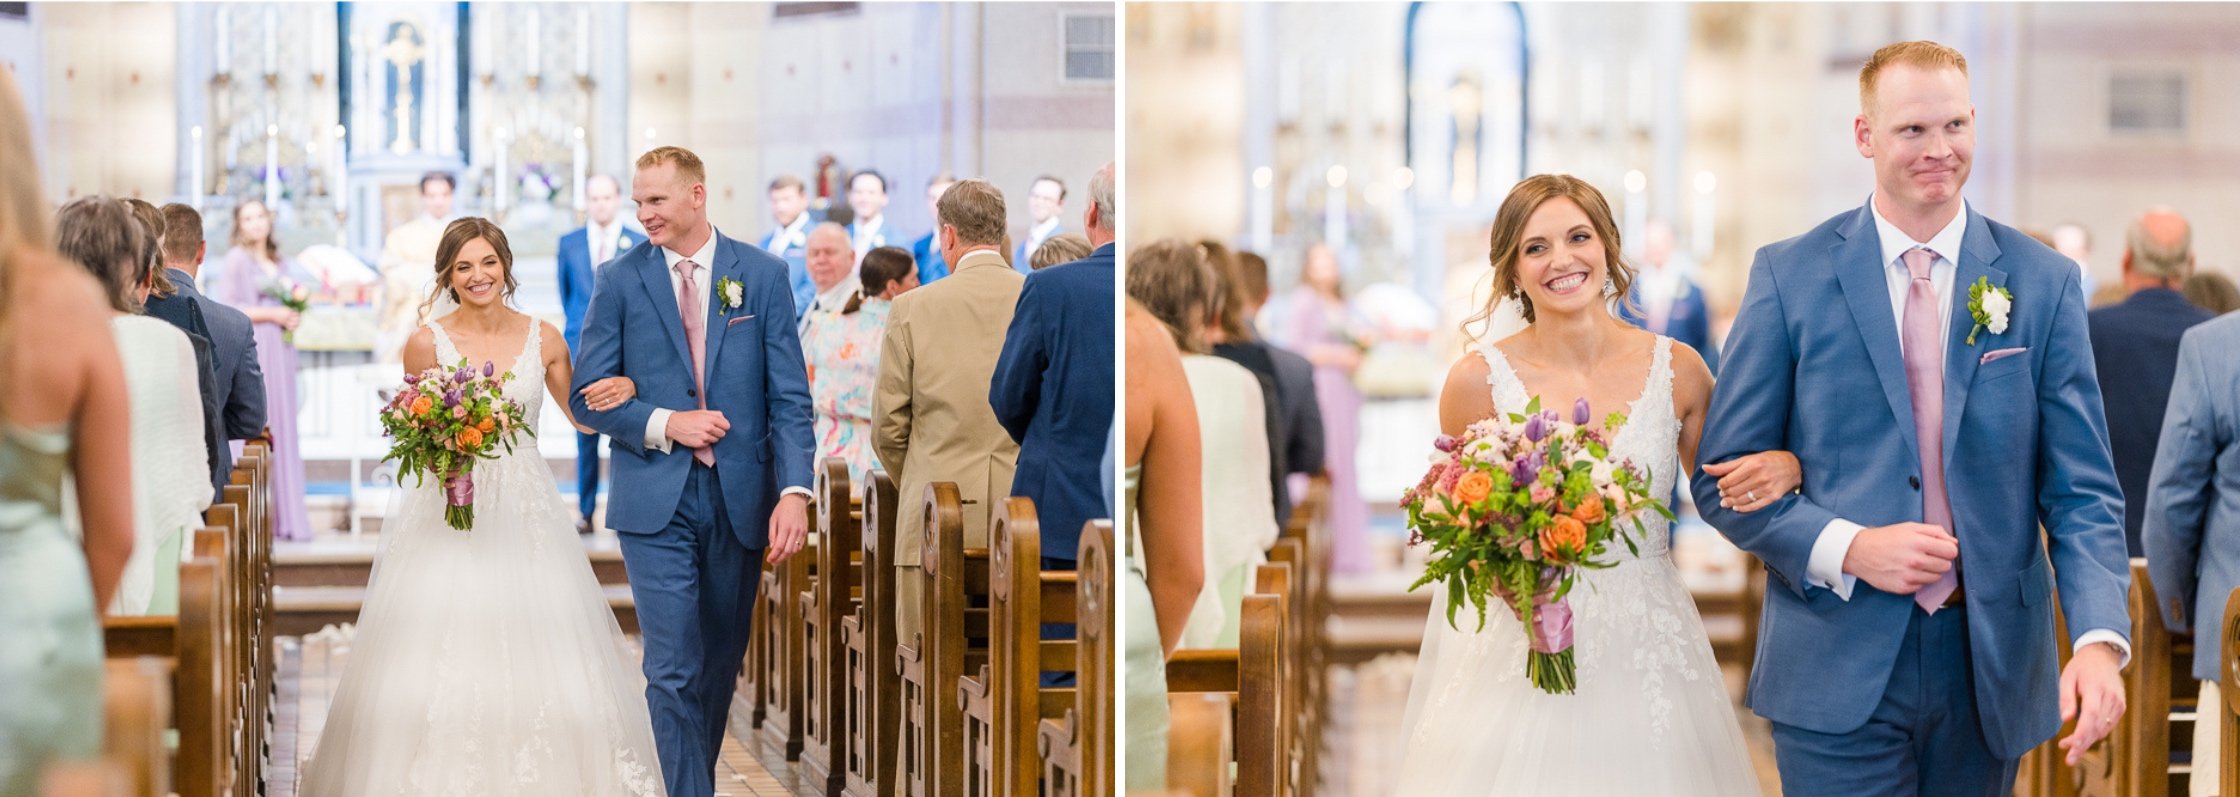 St. Mary Catholic Church Wedding | Bryne Hall Wedding Reception | Spring Hill College Wedding Photographed by Kristen Marcus Photography | Mobile AL Wedding Photographer